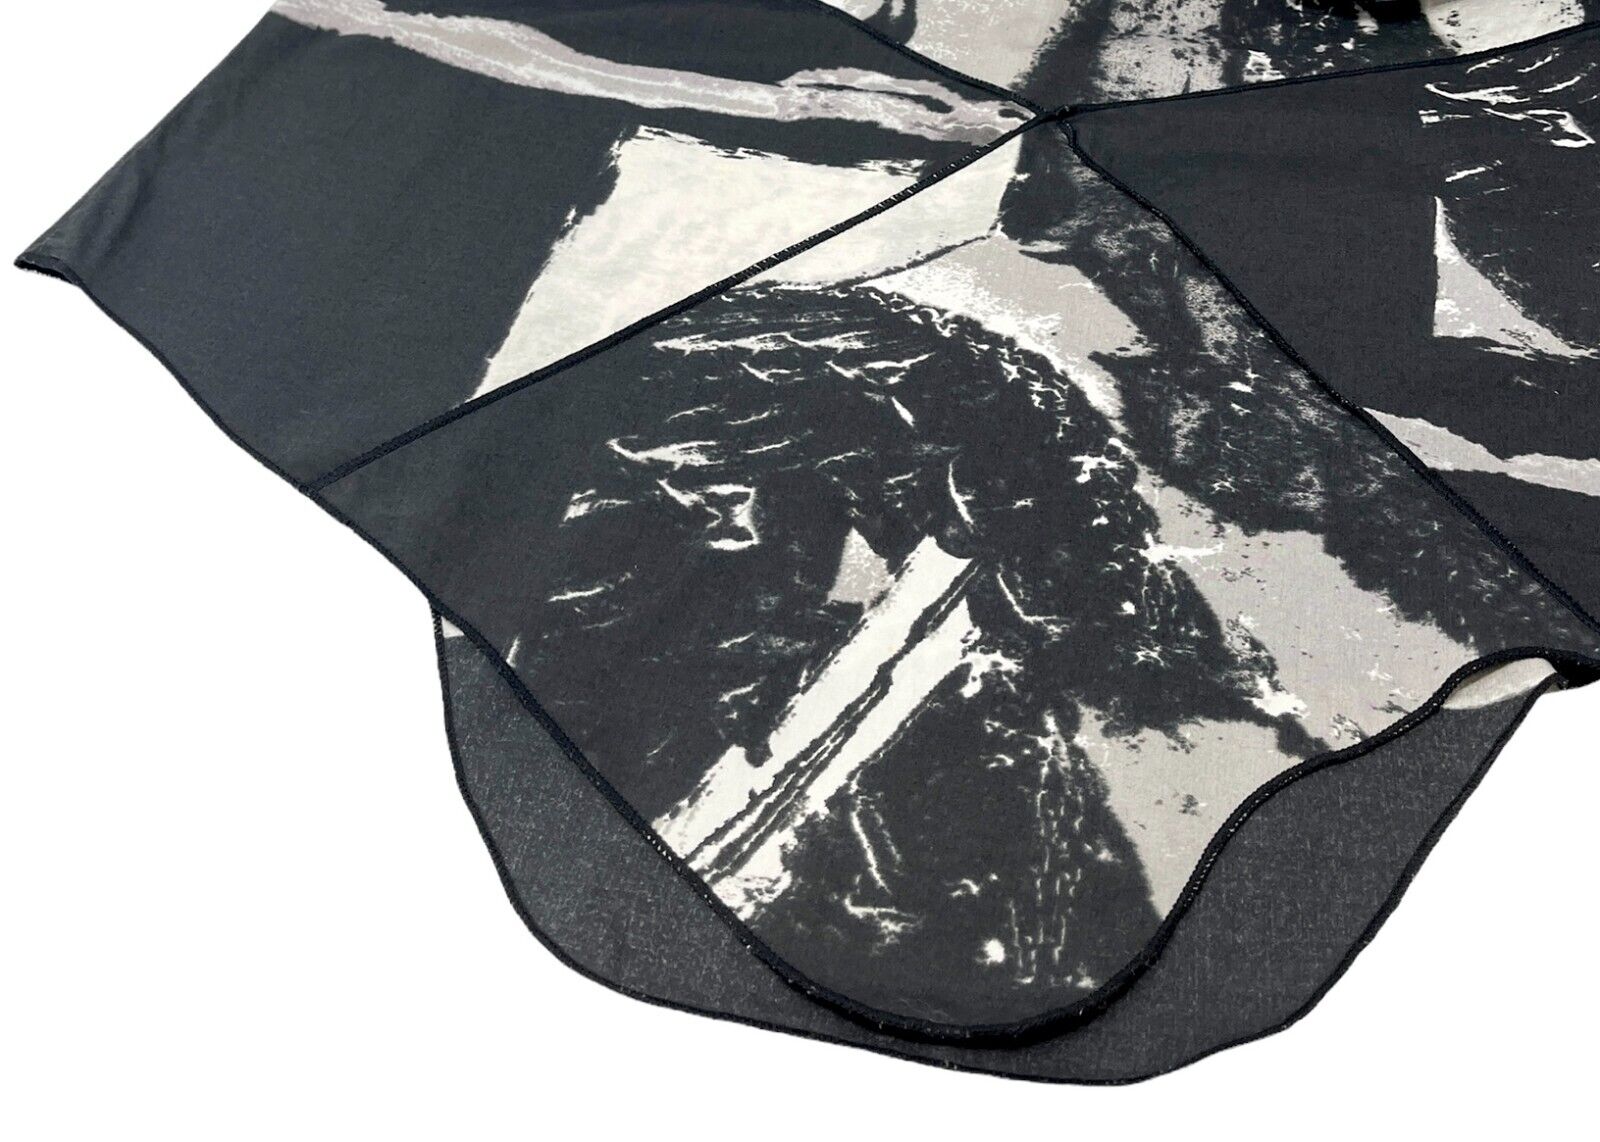 Jean Paul GAULTIER Vintage Dress #40 One-piece Black Gray Cotton Tie RankAB